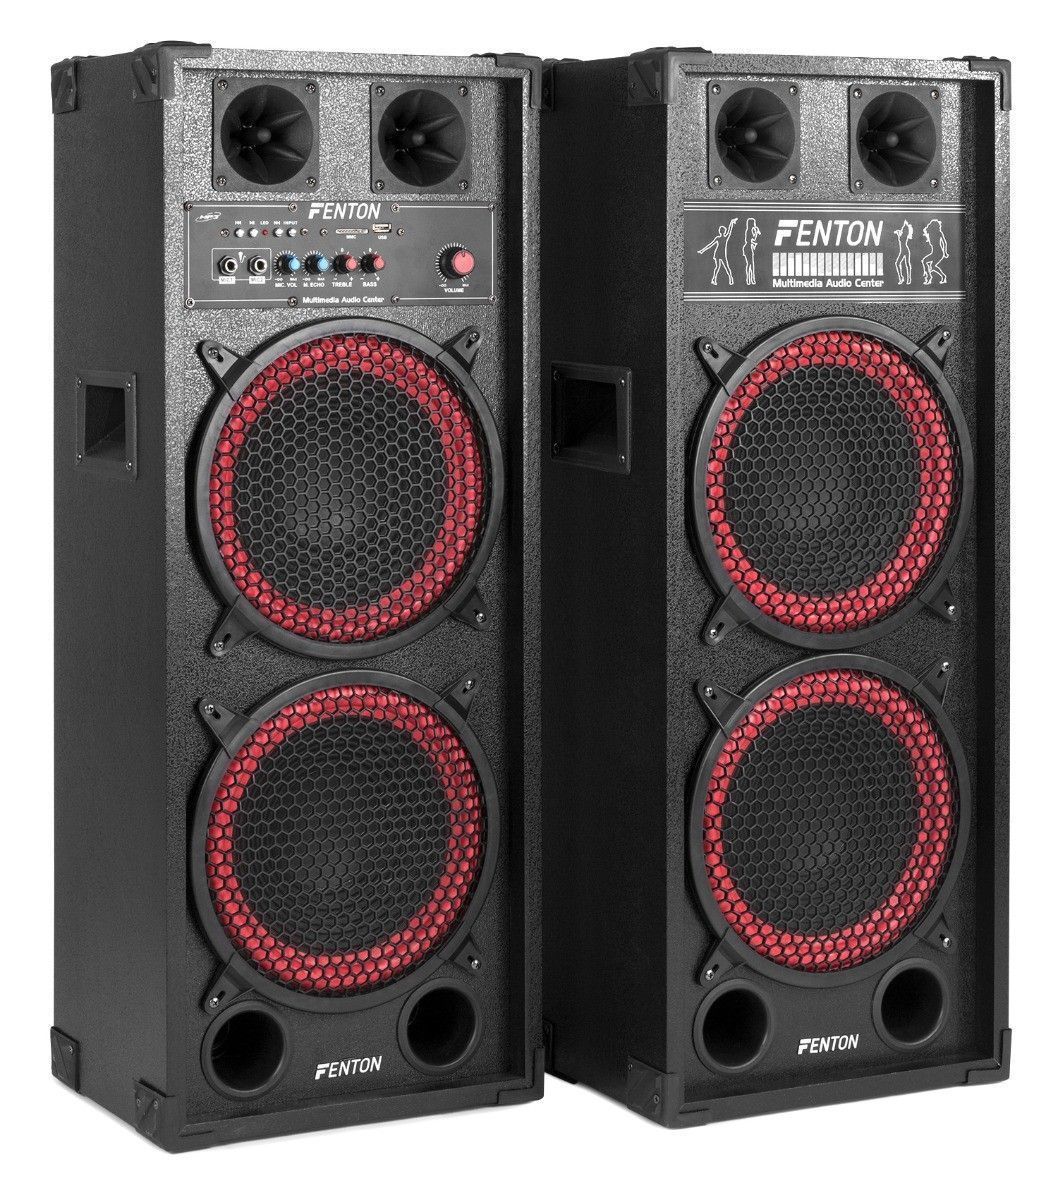 Retourdeal - Fenton SPB-210 Actieve speakerset 2x 10